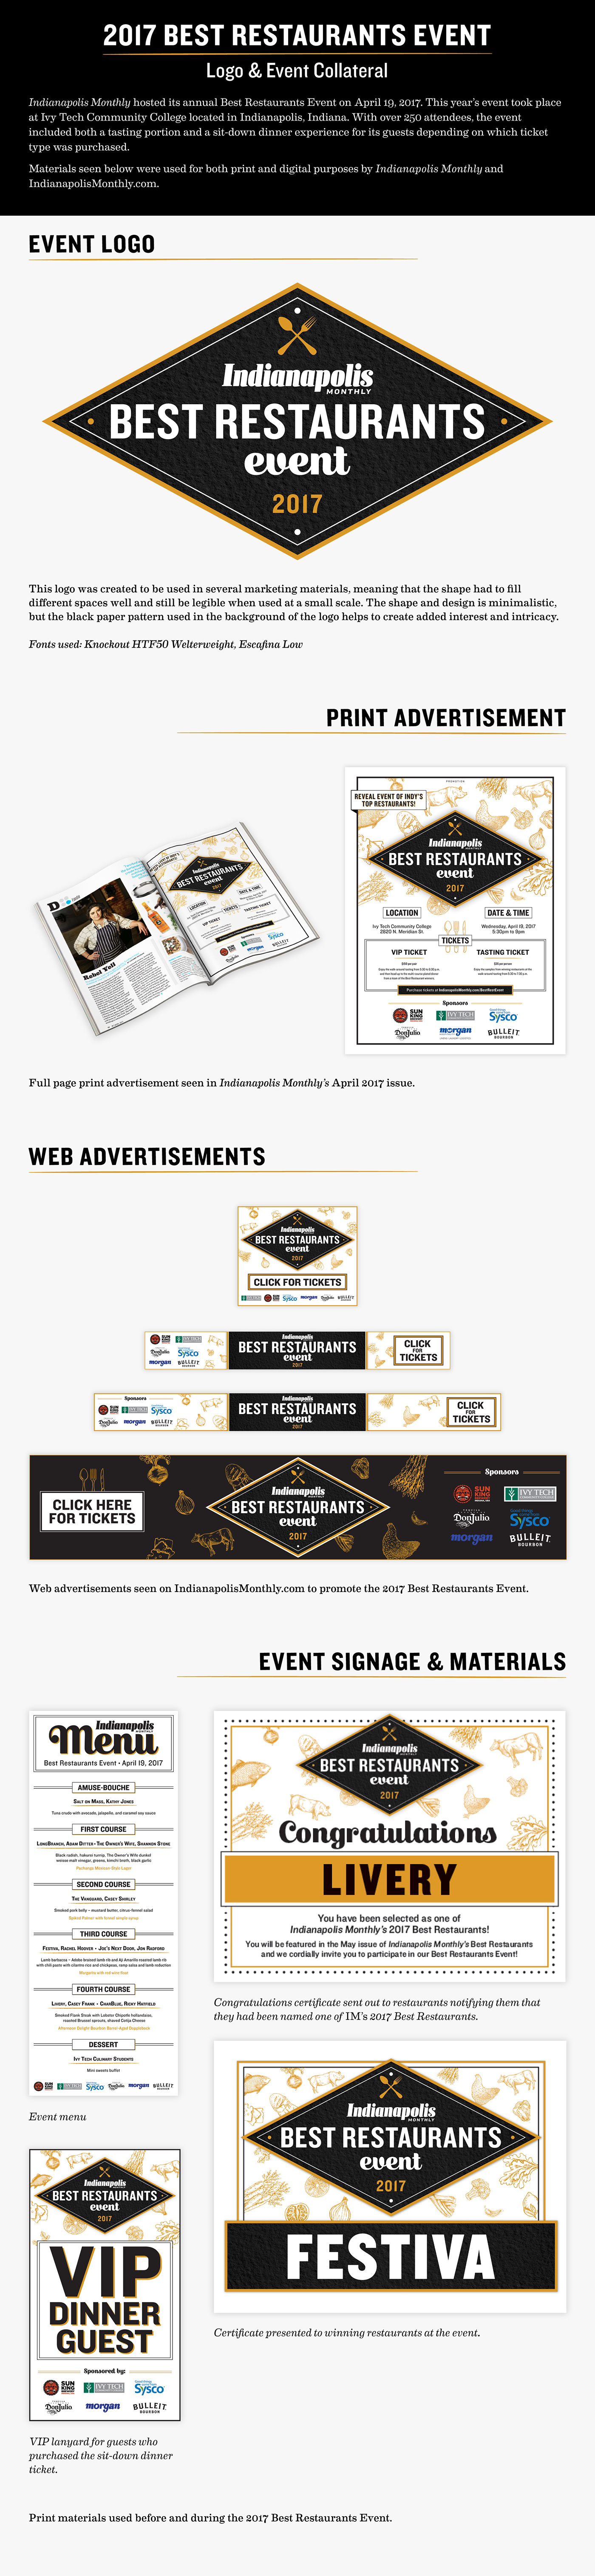 Logo Design event materials advertisement print digital Web